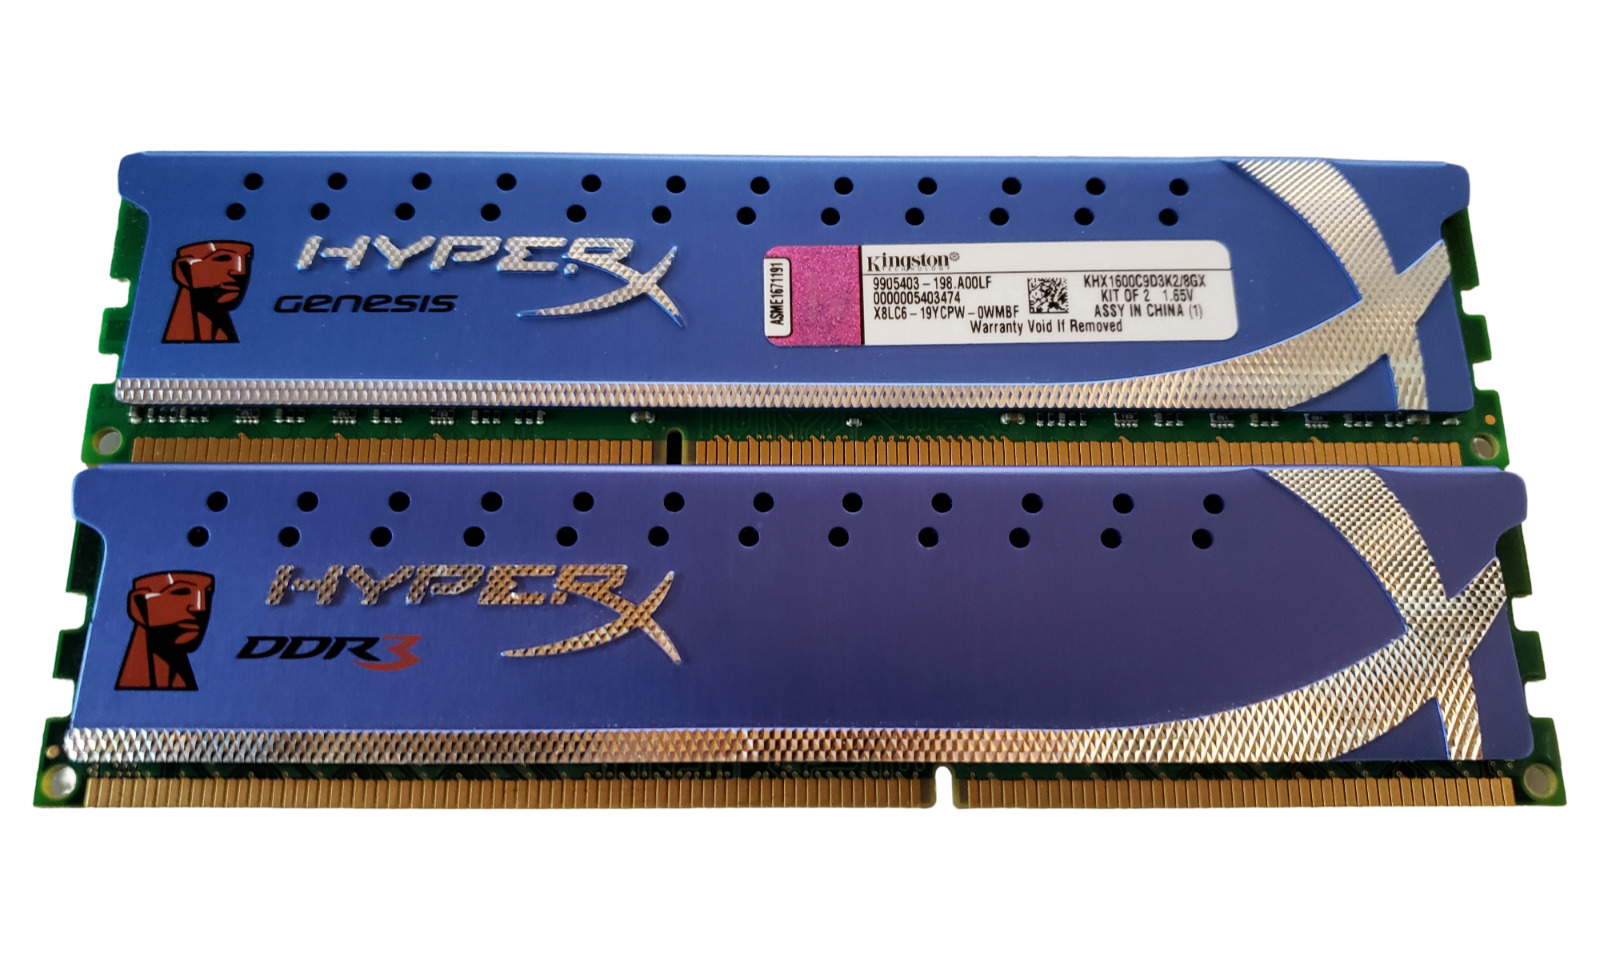 (2 Piece) Kingston HyperX Genesis KHX1600C9D3K2/8GX DDR3-1600 8GB (2x4GB) Memory